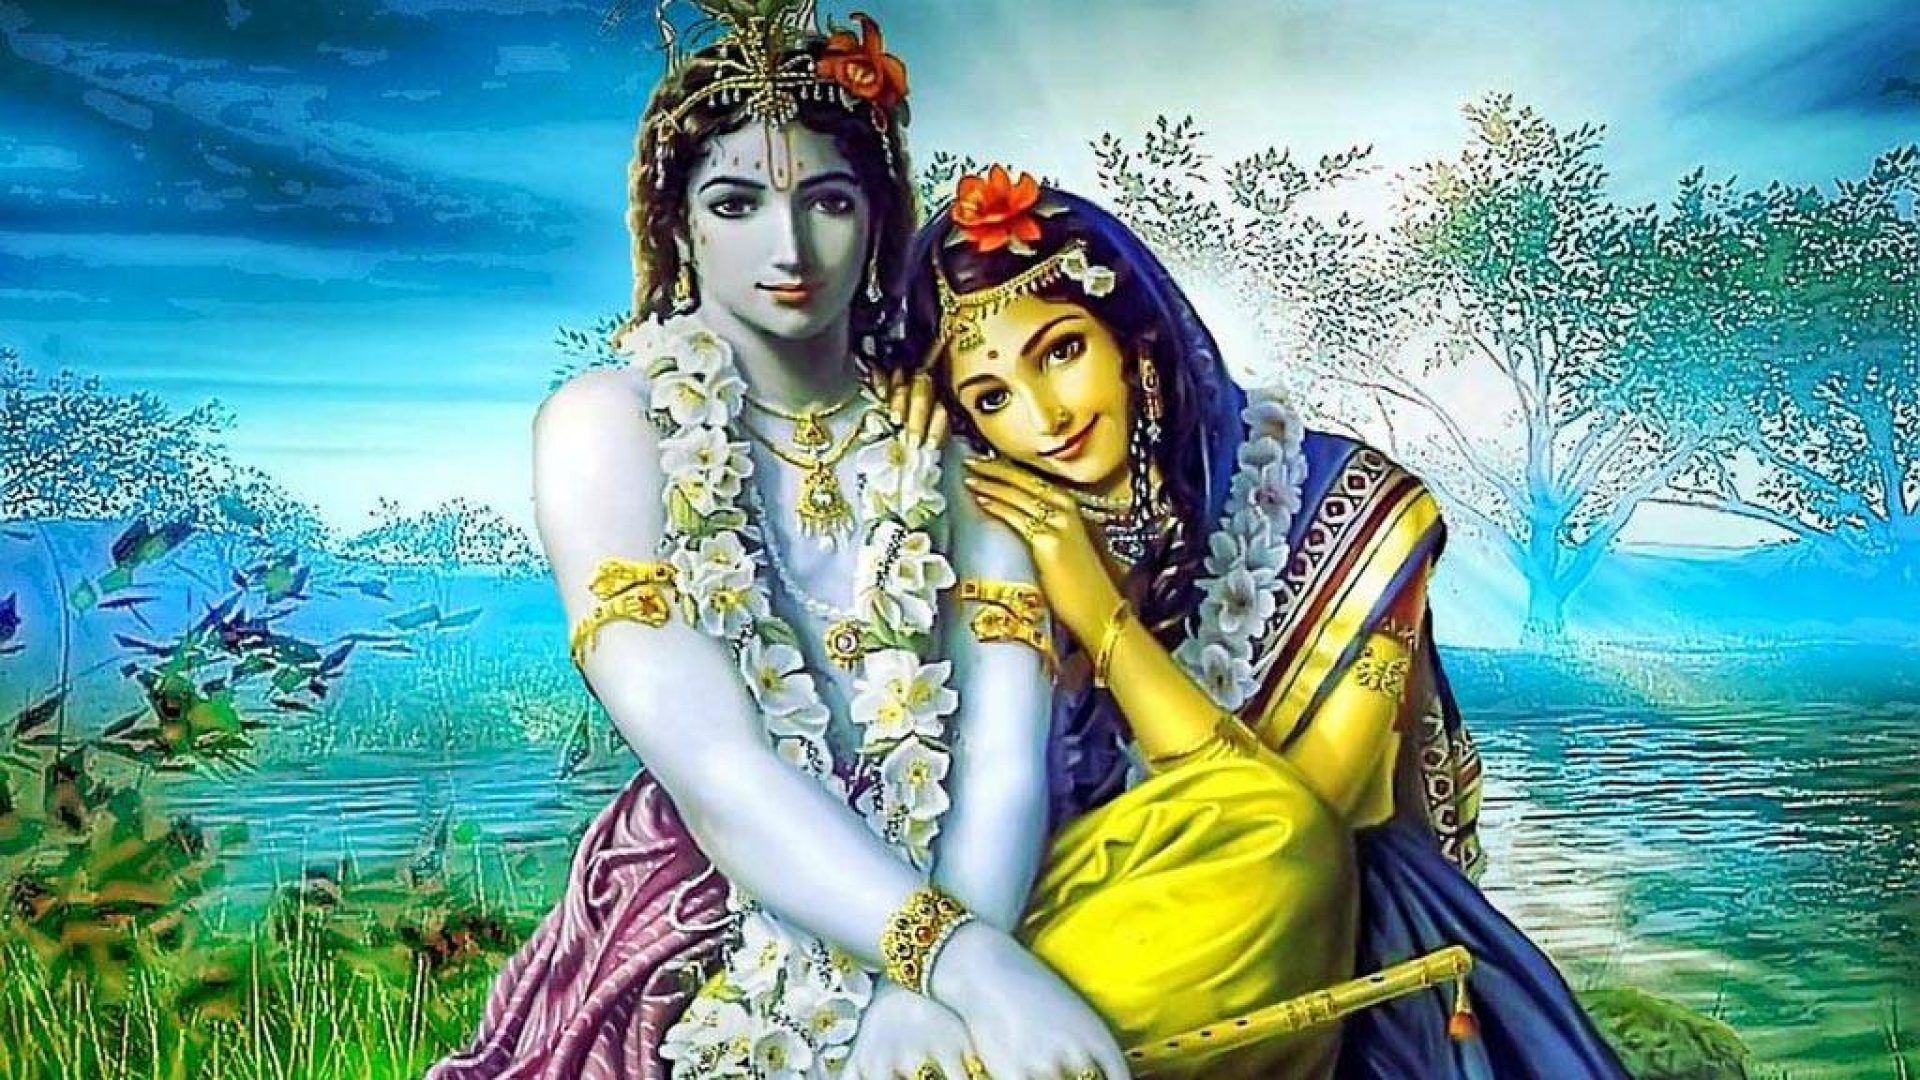 Radha Krishna Love Image. Hindu Gods and Goddesses